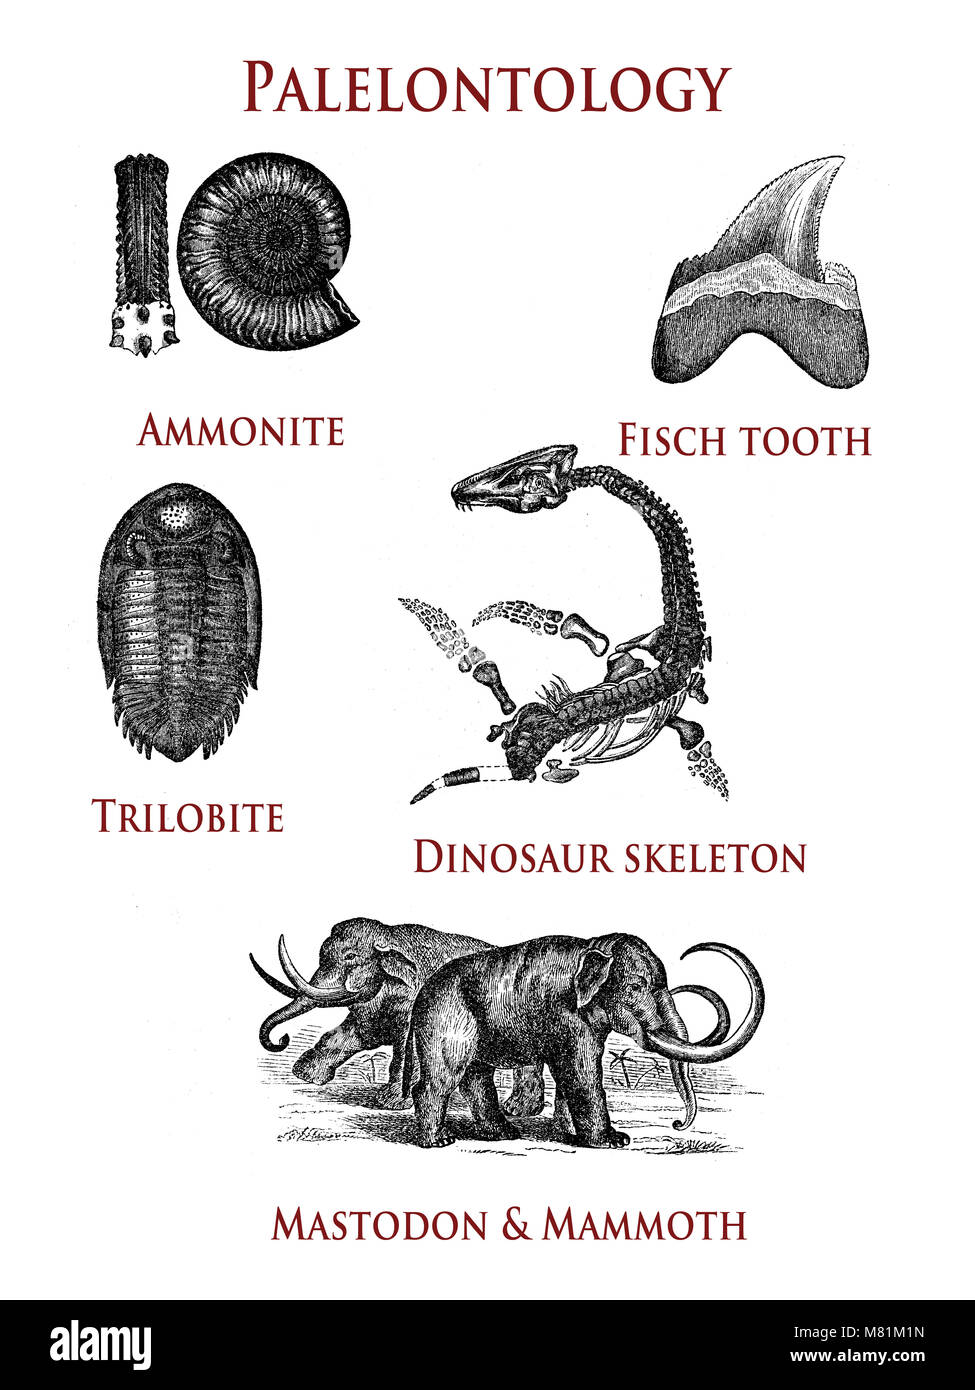 vintage paleontology  illustration of prehistoric animal specimens: ammonite, fish tooth, trilobite, dinosaur skeleton and a reconstruction of mastodon and mammoth Stock Photo